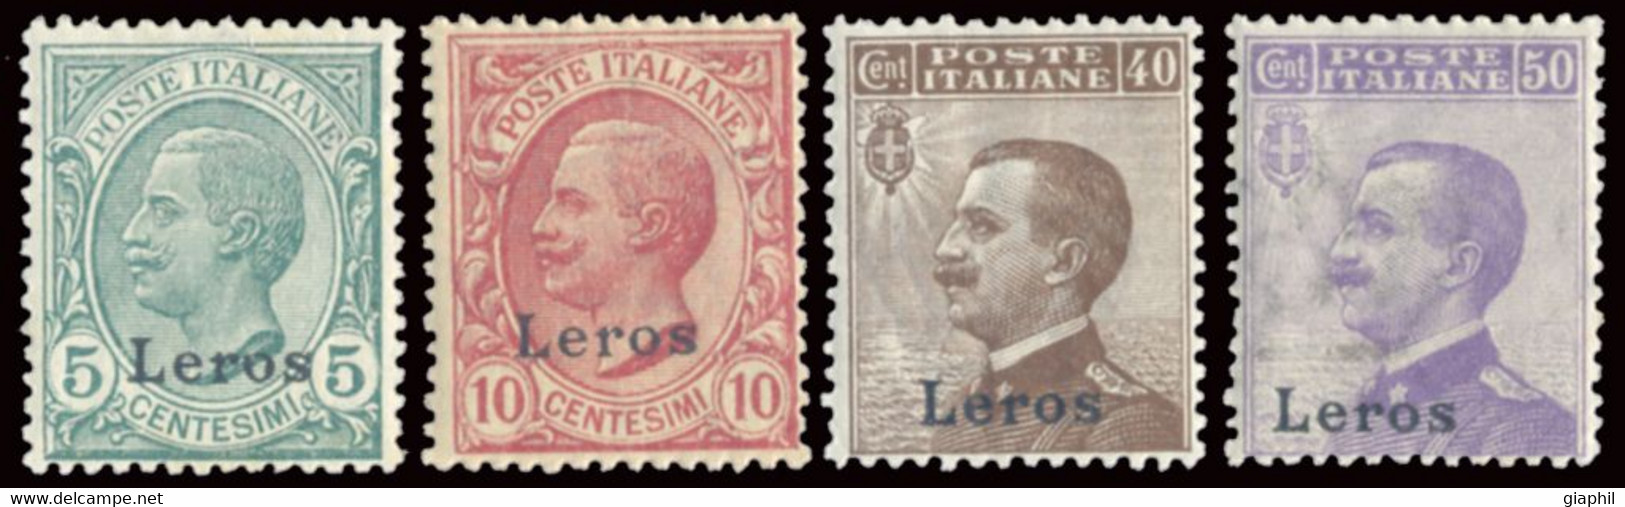 ITALIA ISOLE DELL'EGEO LERO 1912 5, 10, 40, 50 C. (Sass. 2, 3, 6, 7) NUOVI INTEGRI ** - Egée (Lero)